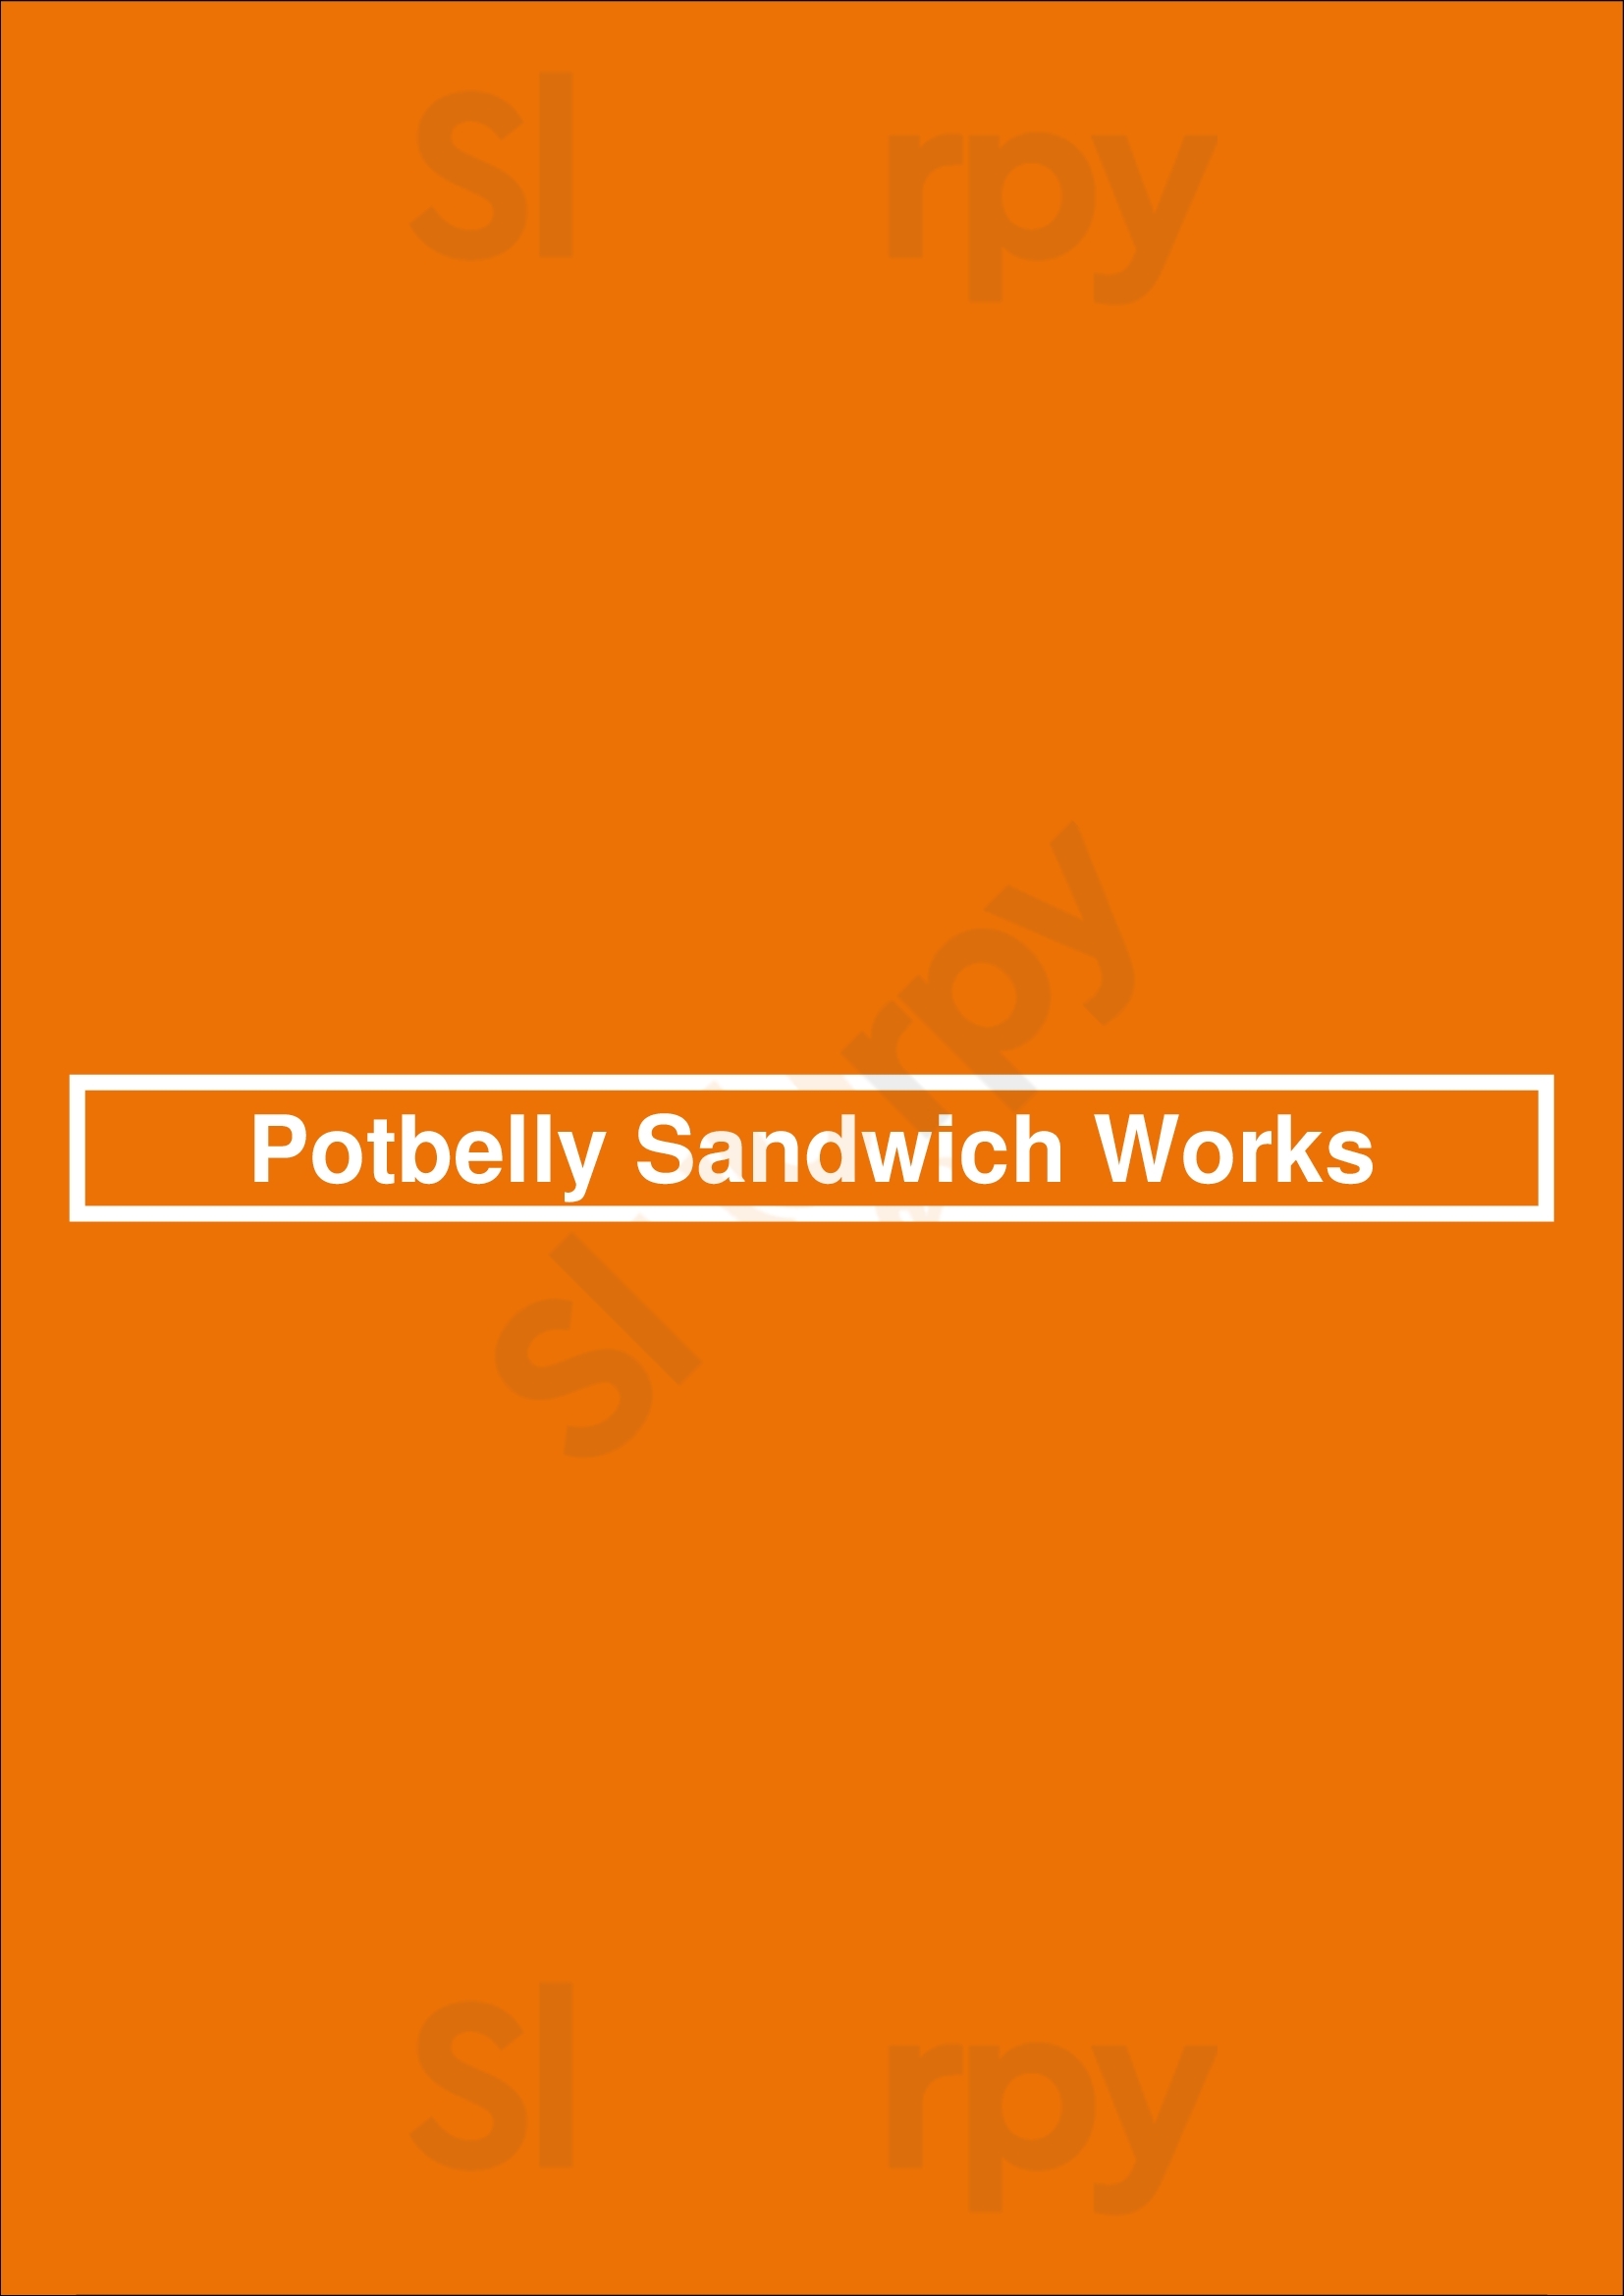 Potbelly Sandwich Shop Chicago Menu - 1